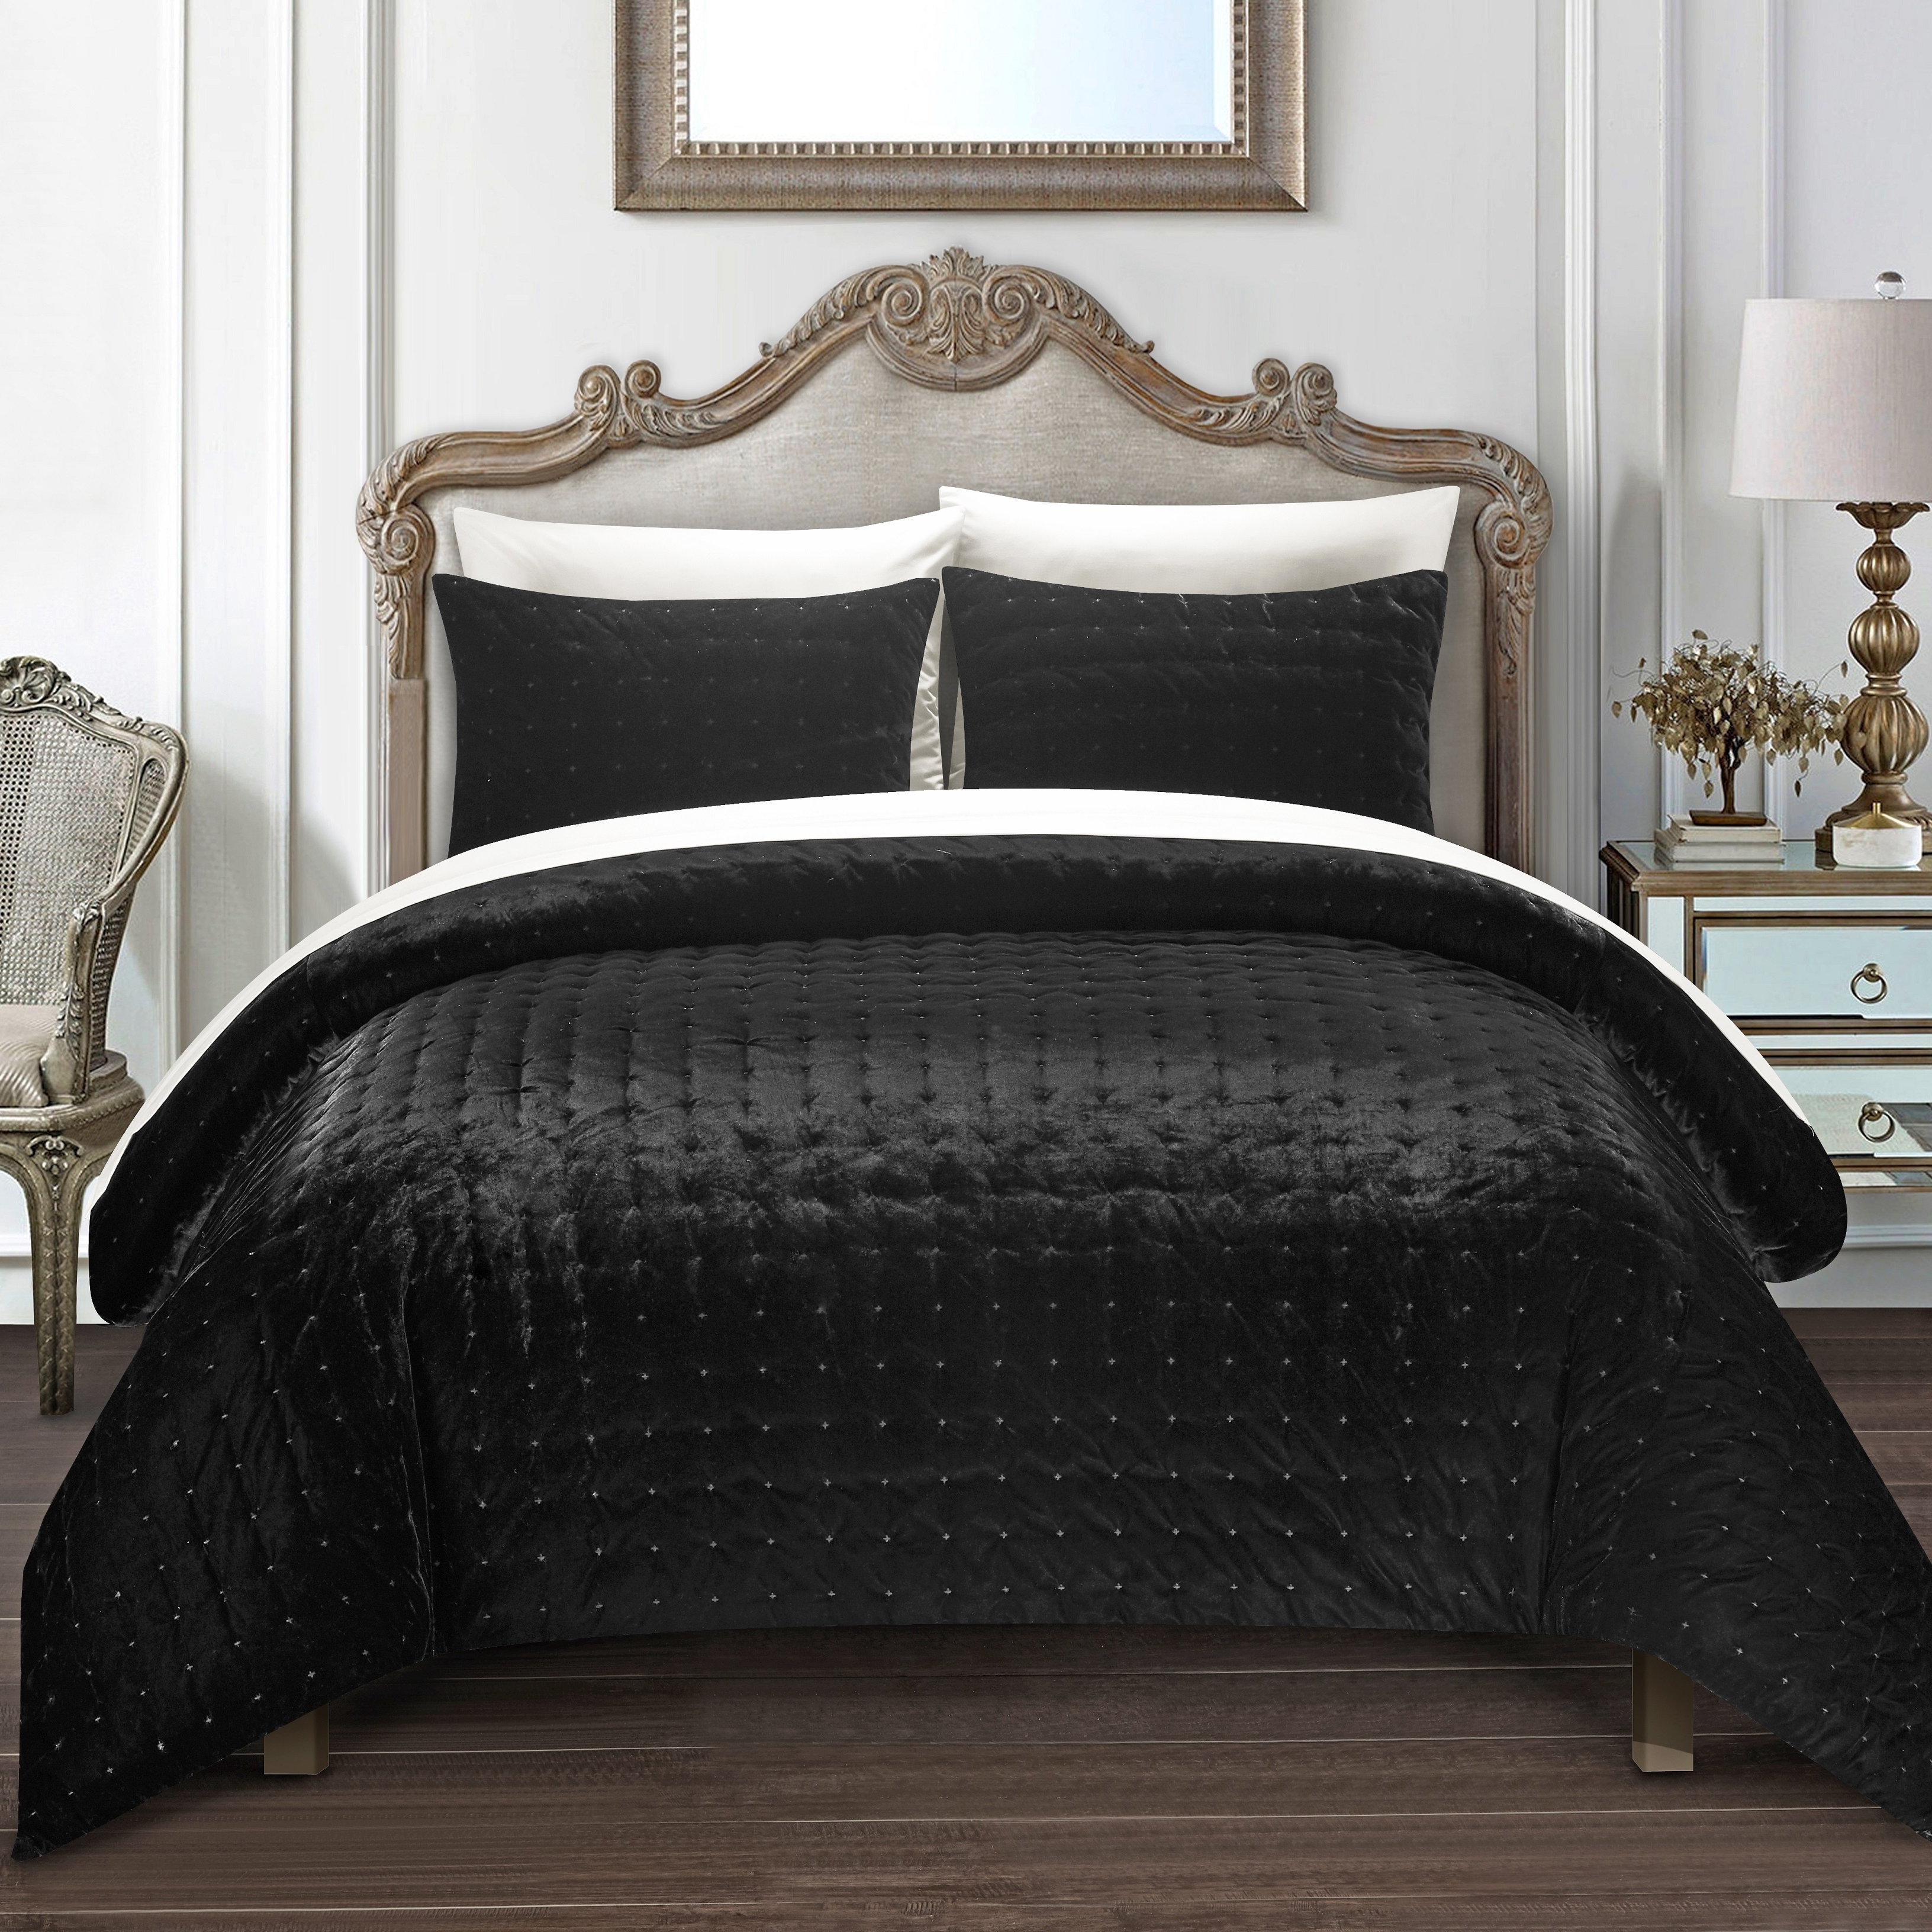 Chyna 3 Piece Comforter Set Luxurious Velvet Bedding - Burgundy, King